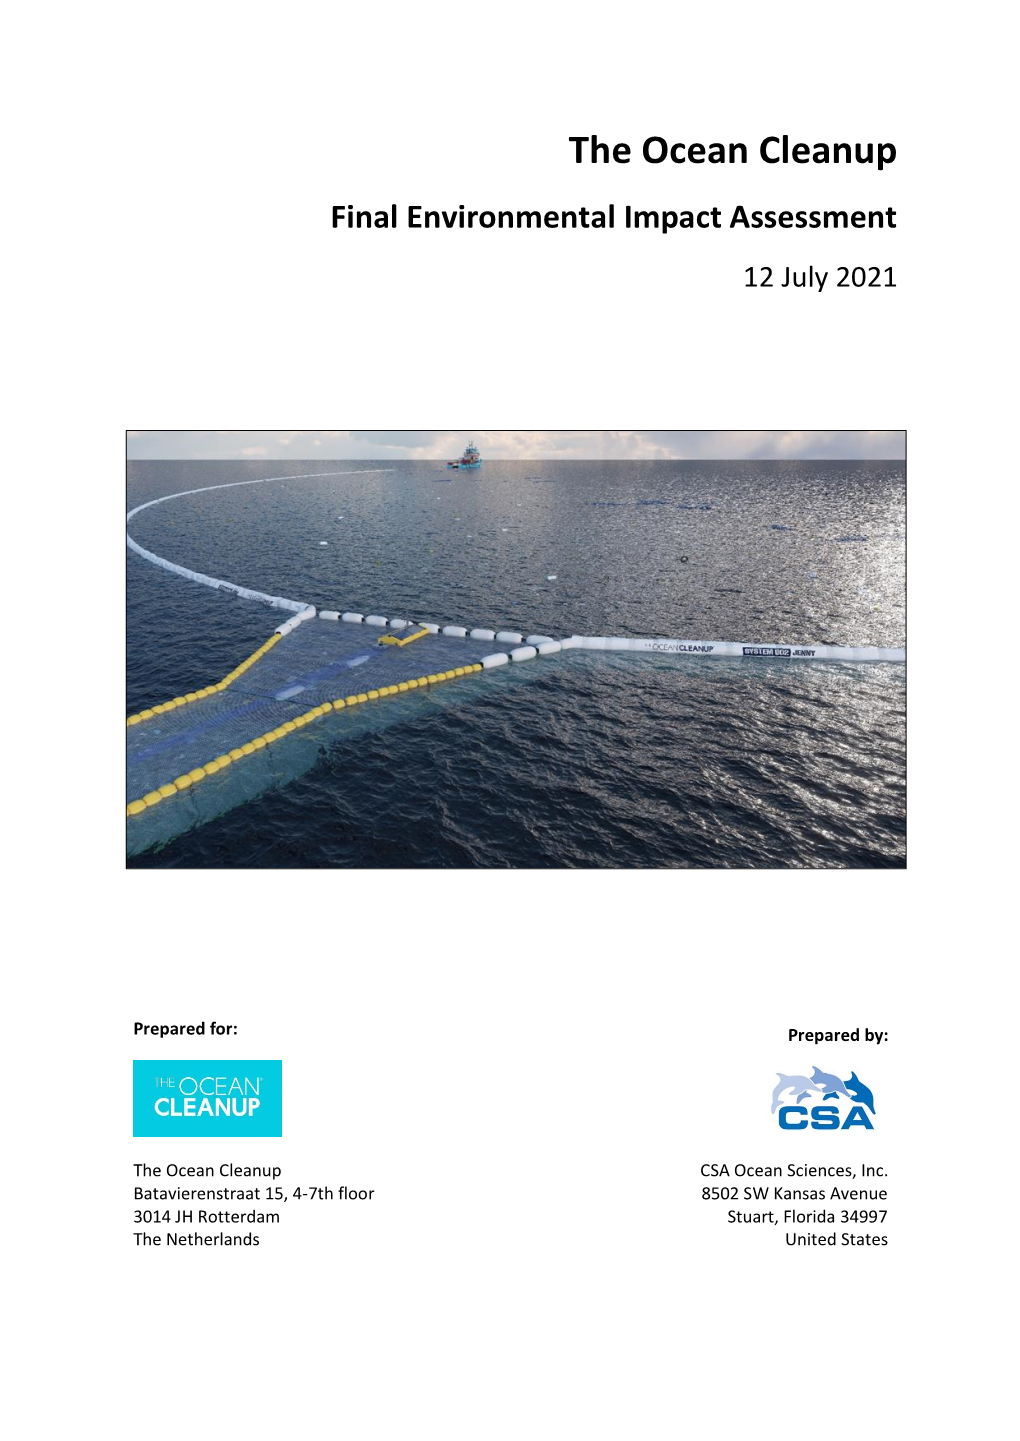 Environmental Impact Assessment 12 July 2021